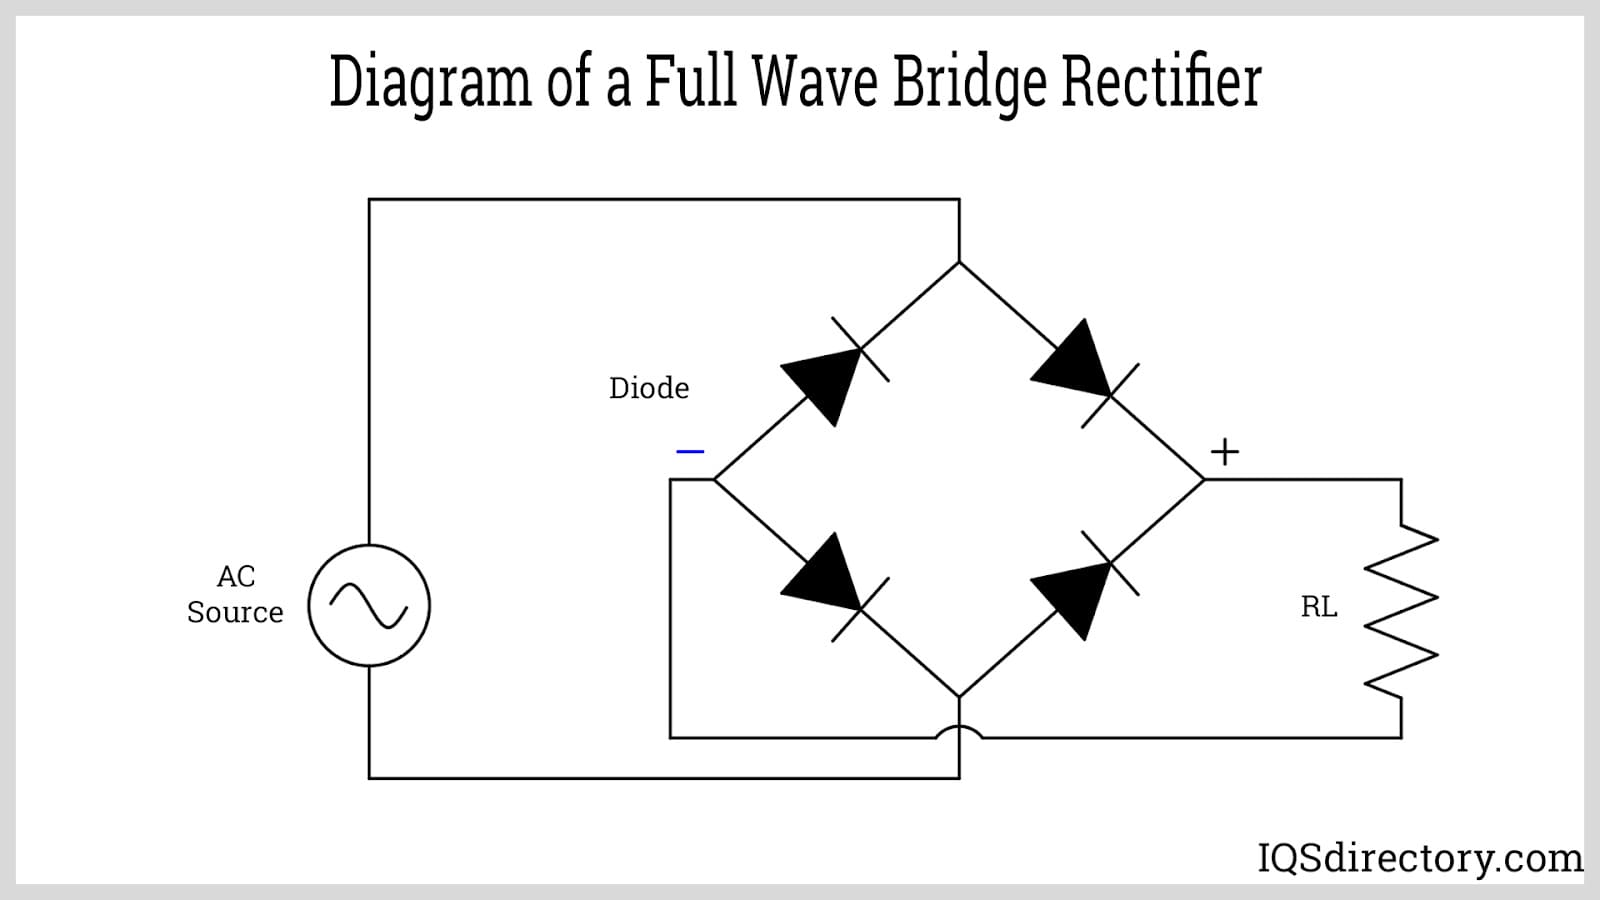 Diagram of a Full Wave Bridge Rectifier